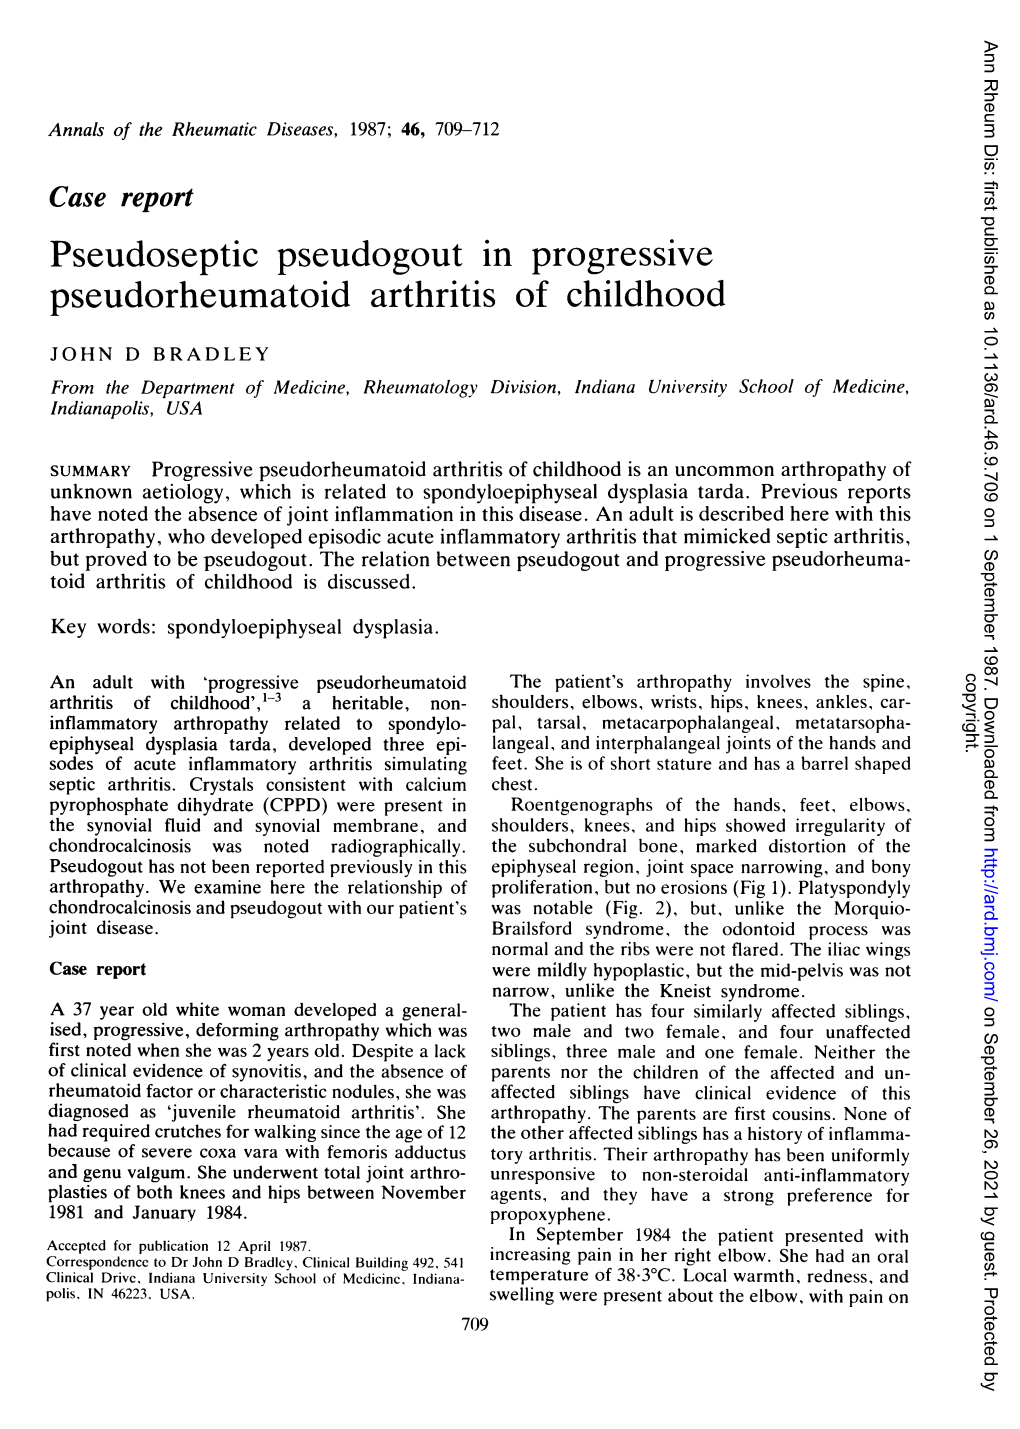 Pseudoseptic Pseudogout in Progressive Pseudorheumatoid Arthritis of Childhood